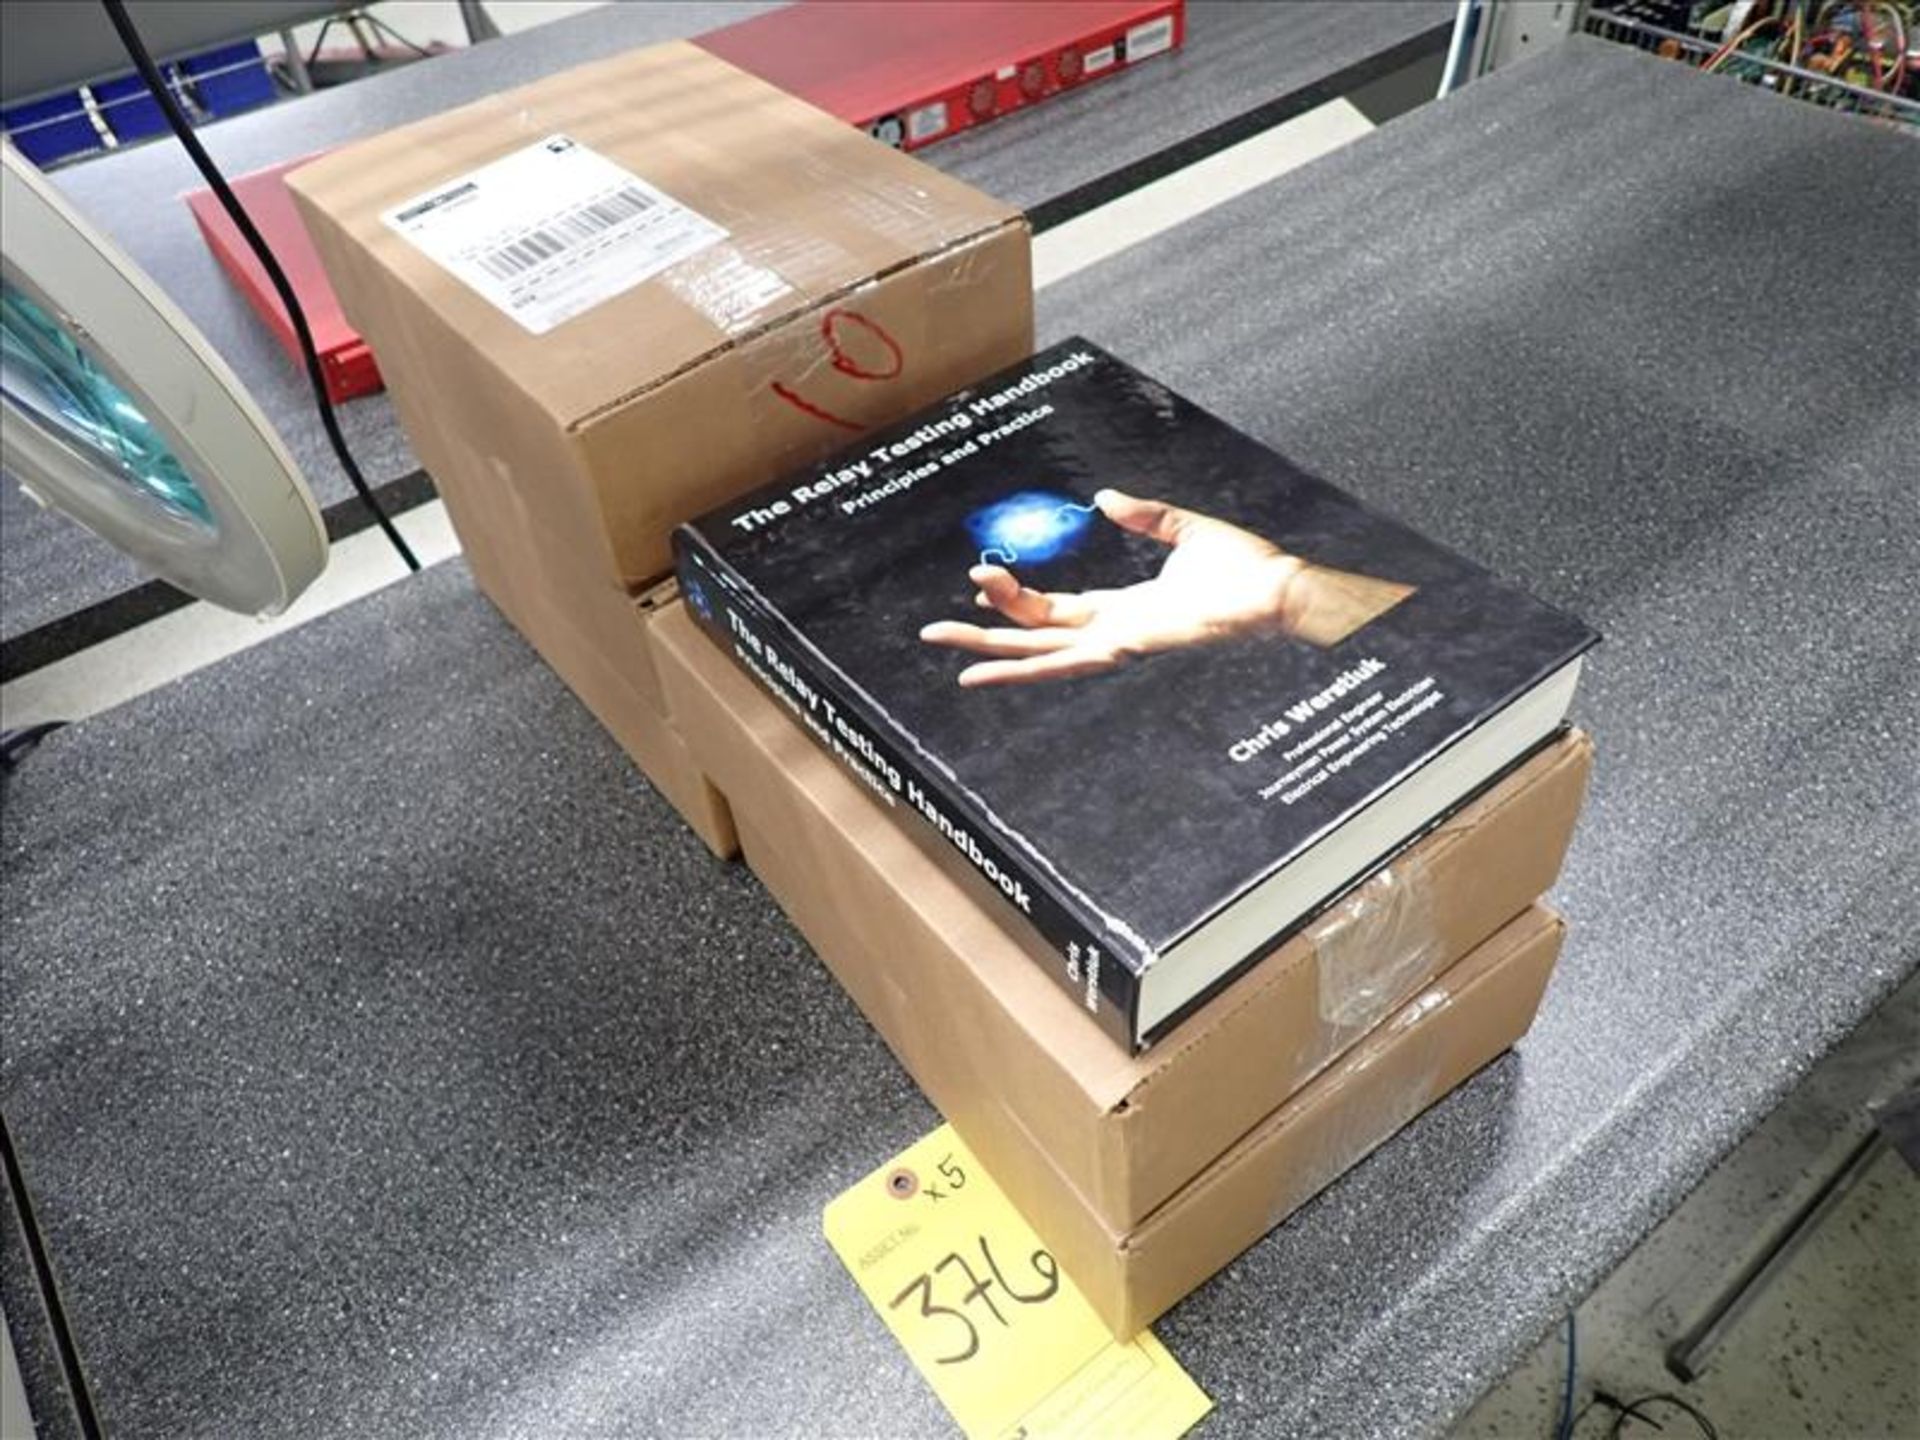 (5 copies) "The Relay Testing Handbook" by Chris Werstiuk NEW